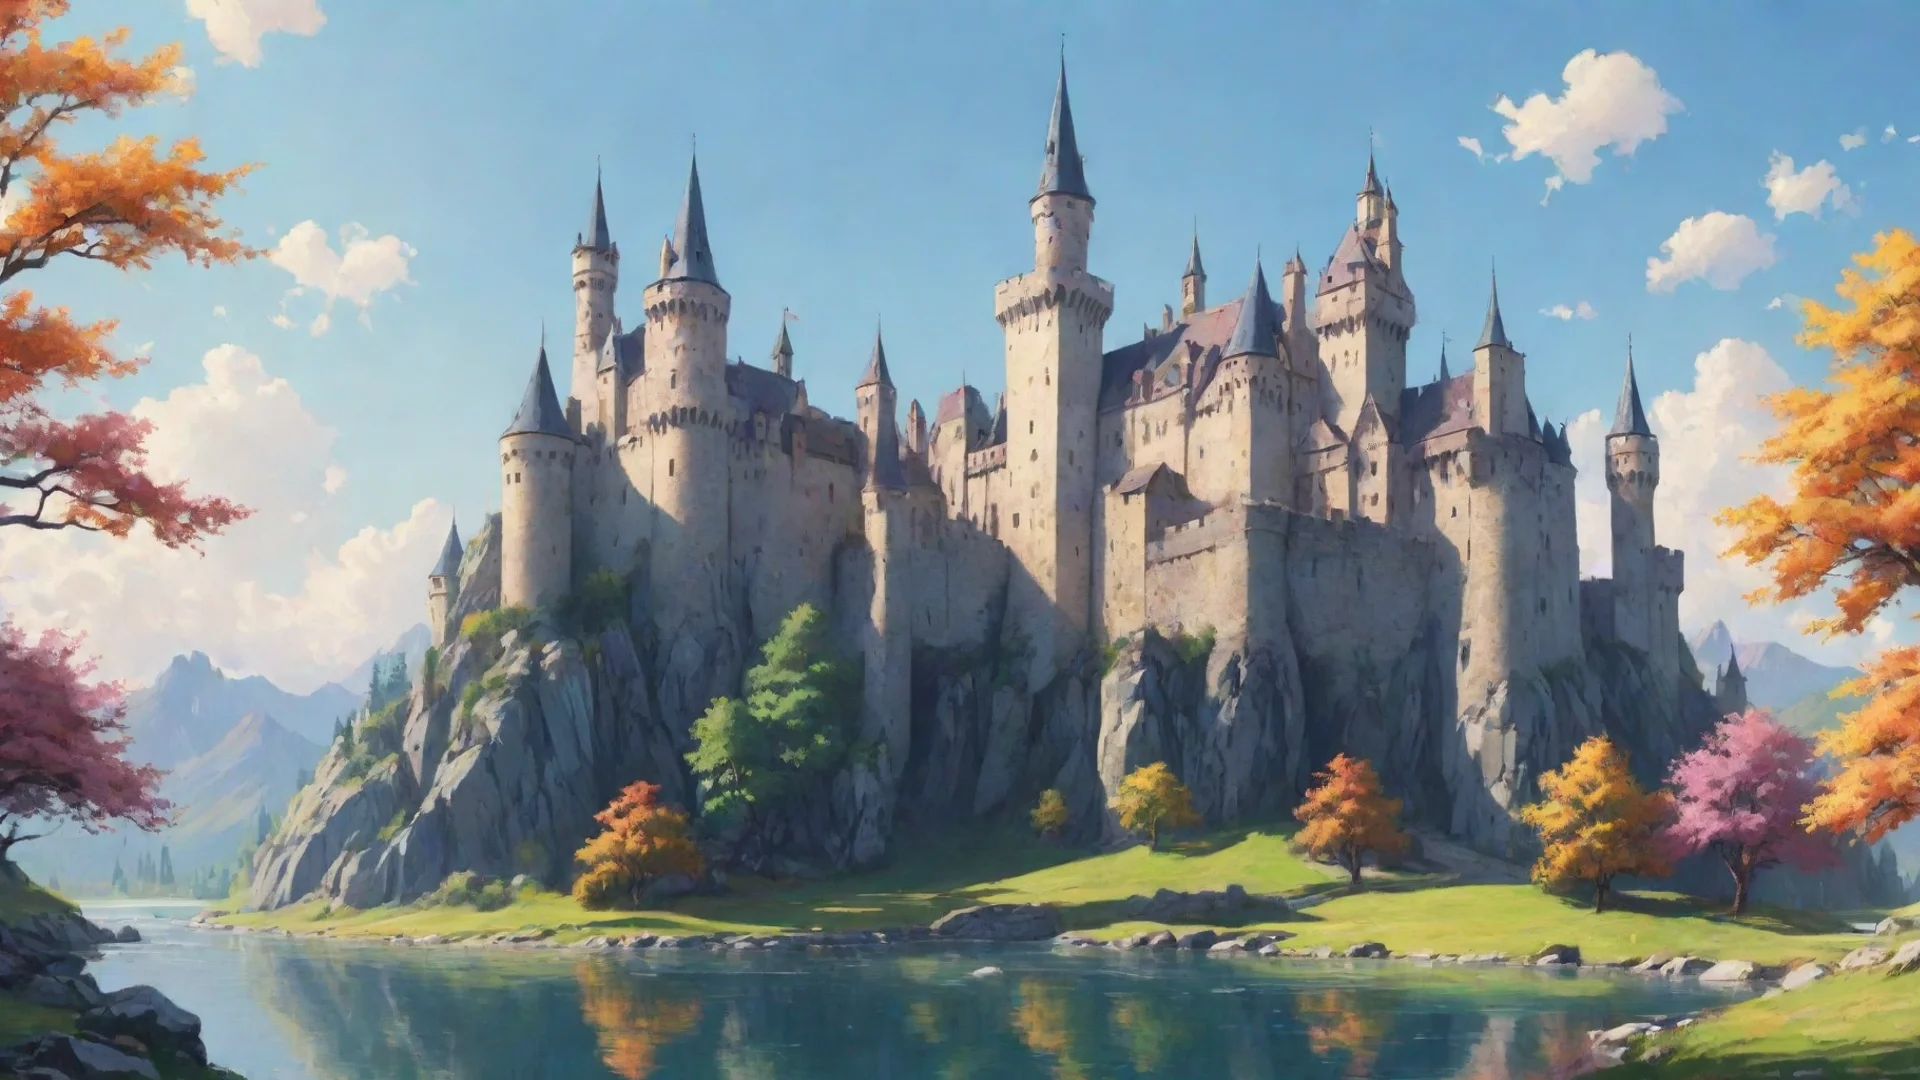 amazing castle lovely relaxing lowfi landscape bright crisp colours clear awesome portrait 2 wide